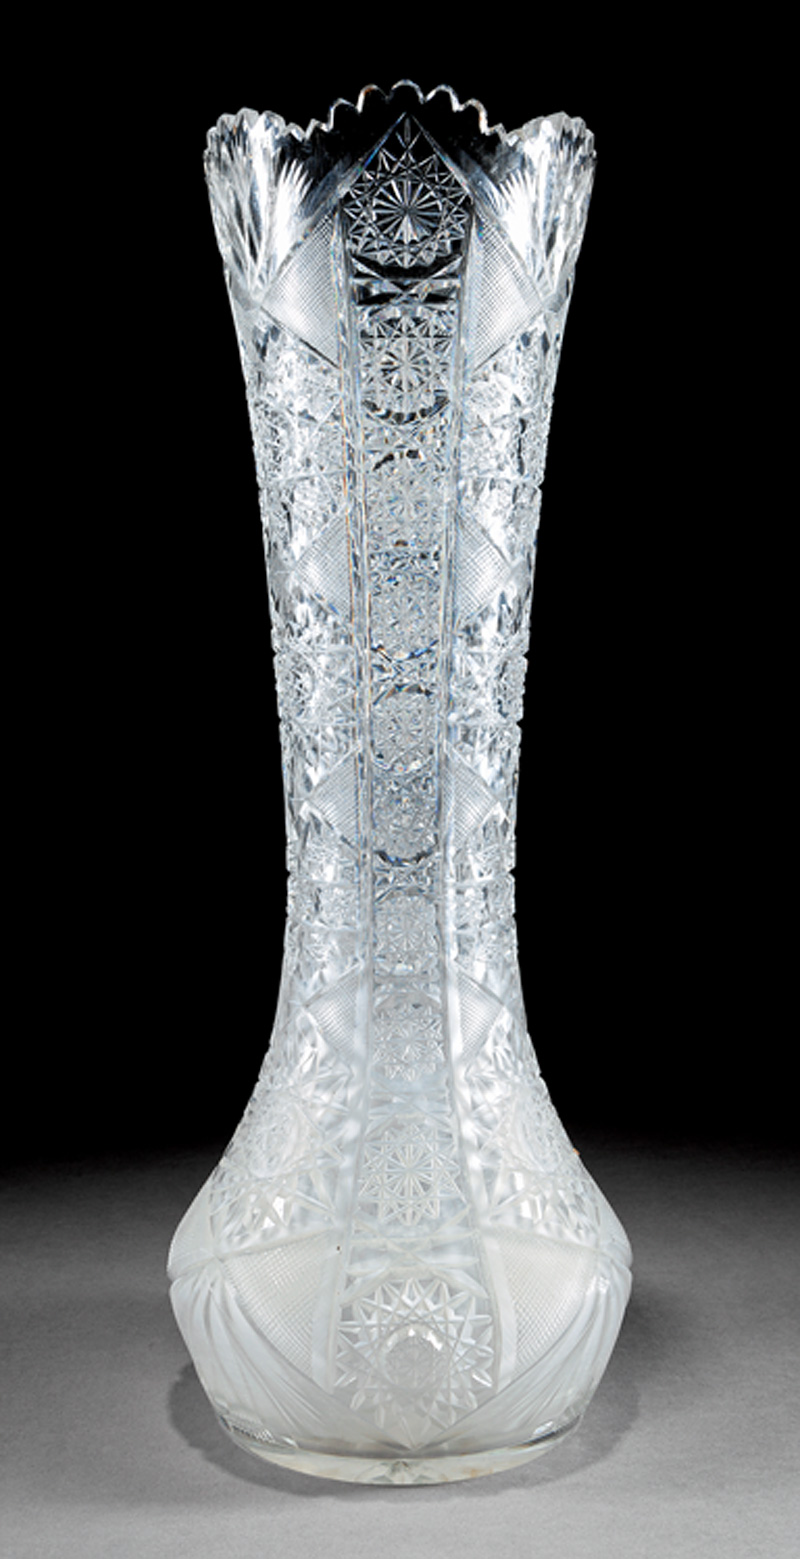 American Brilliant Cut Glass Vase, late 19th c., star and fan motif, h. 18 in., dia. 5 1/2 in